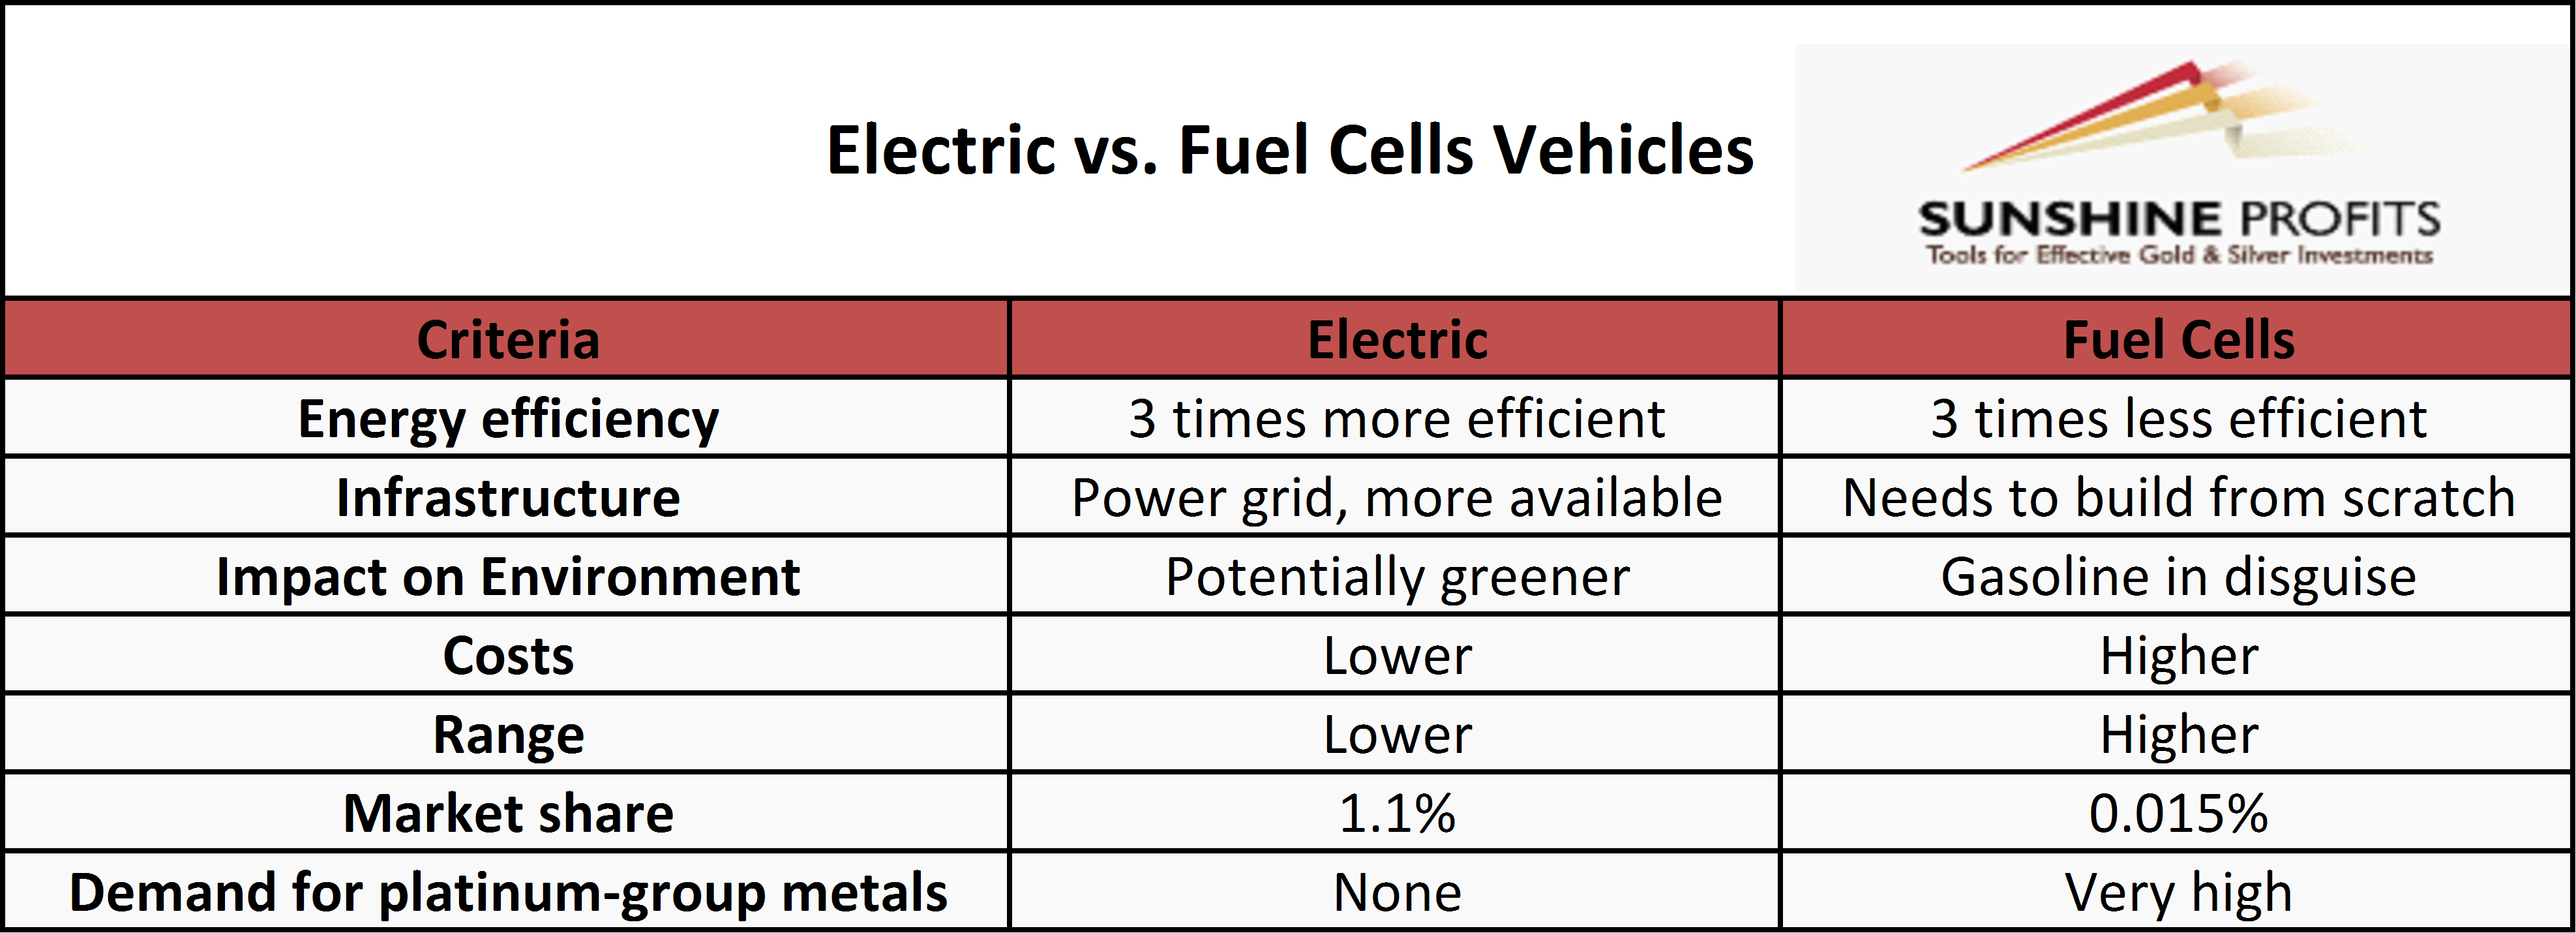 Electric vs fuel cells vehicles